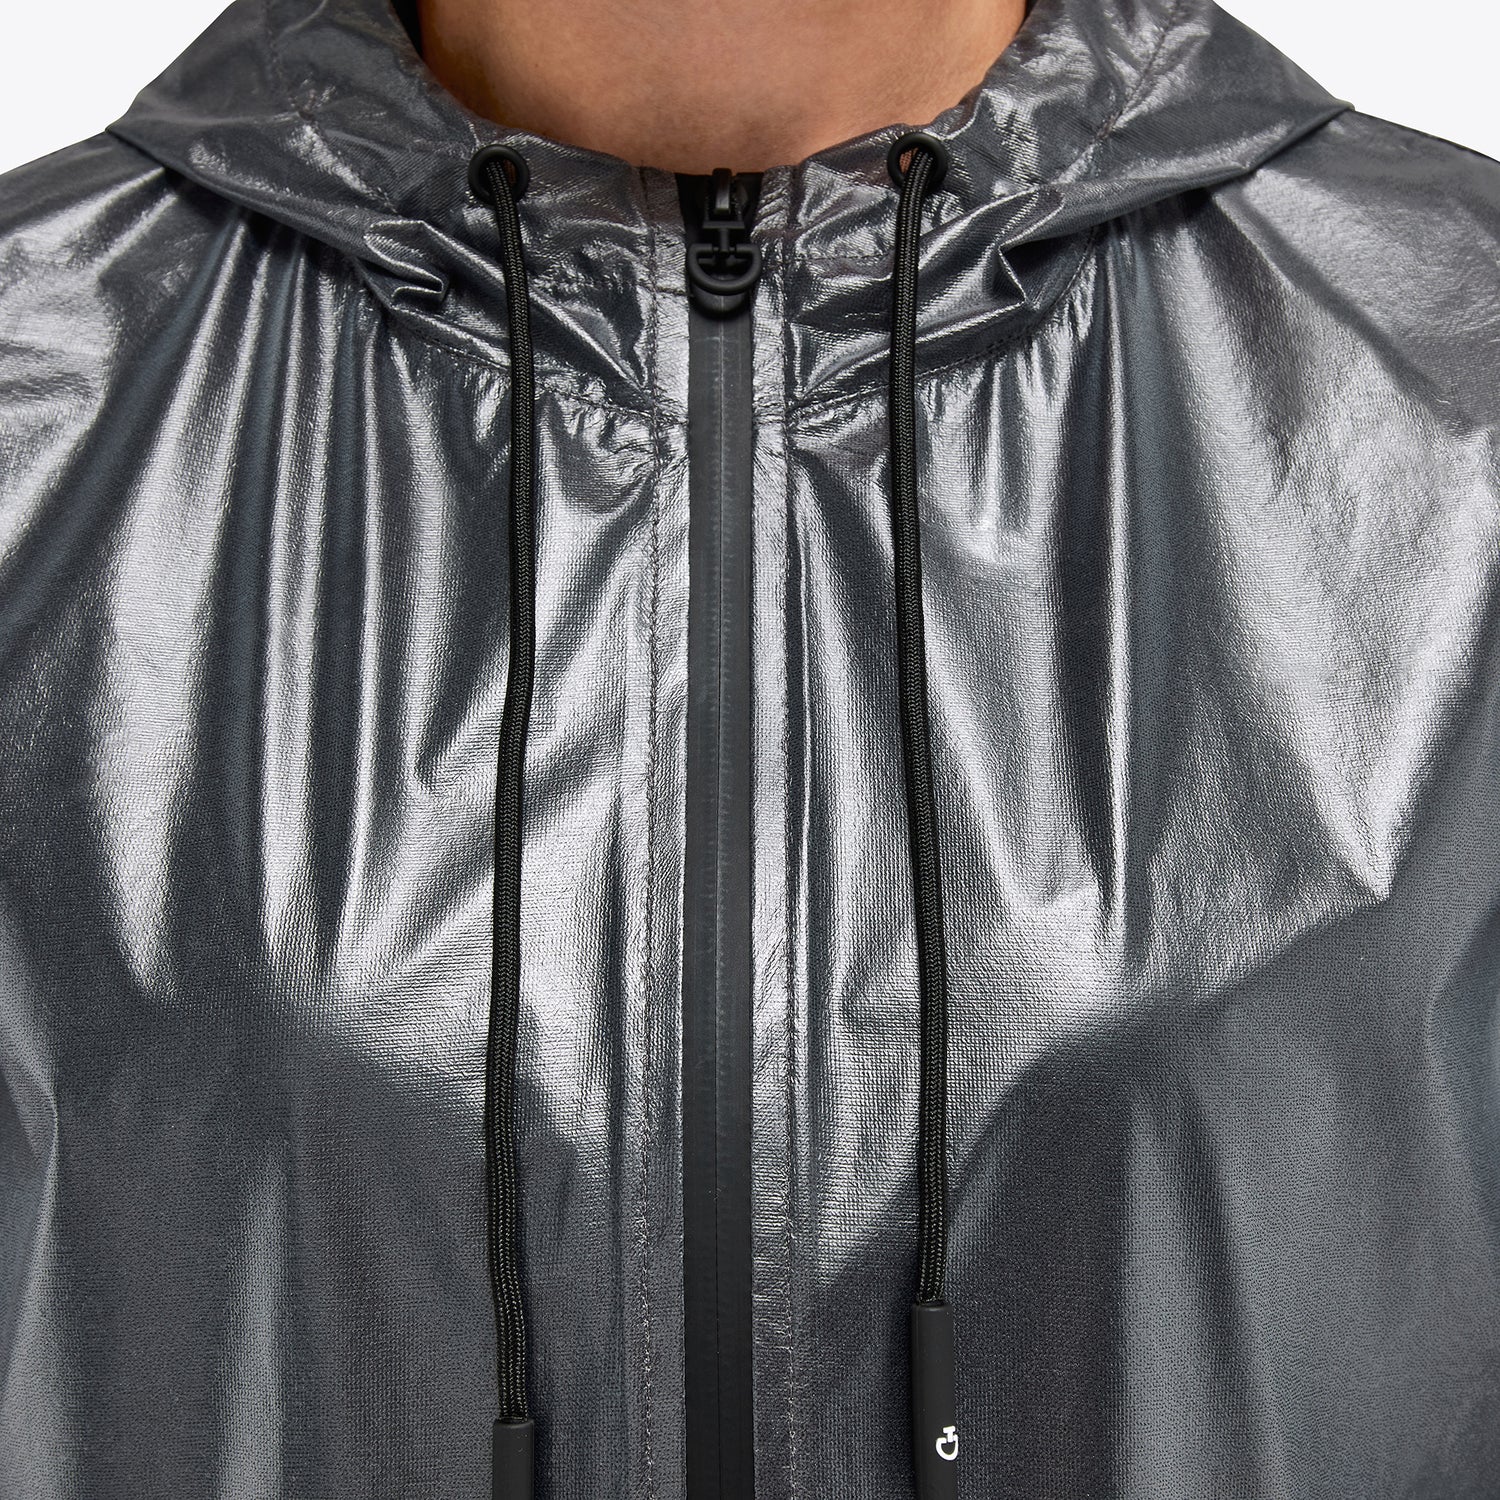 Equestrian rain jacket